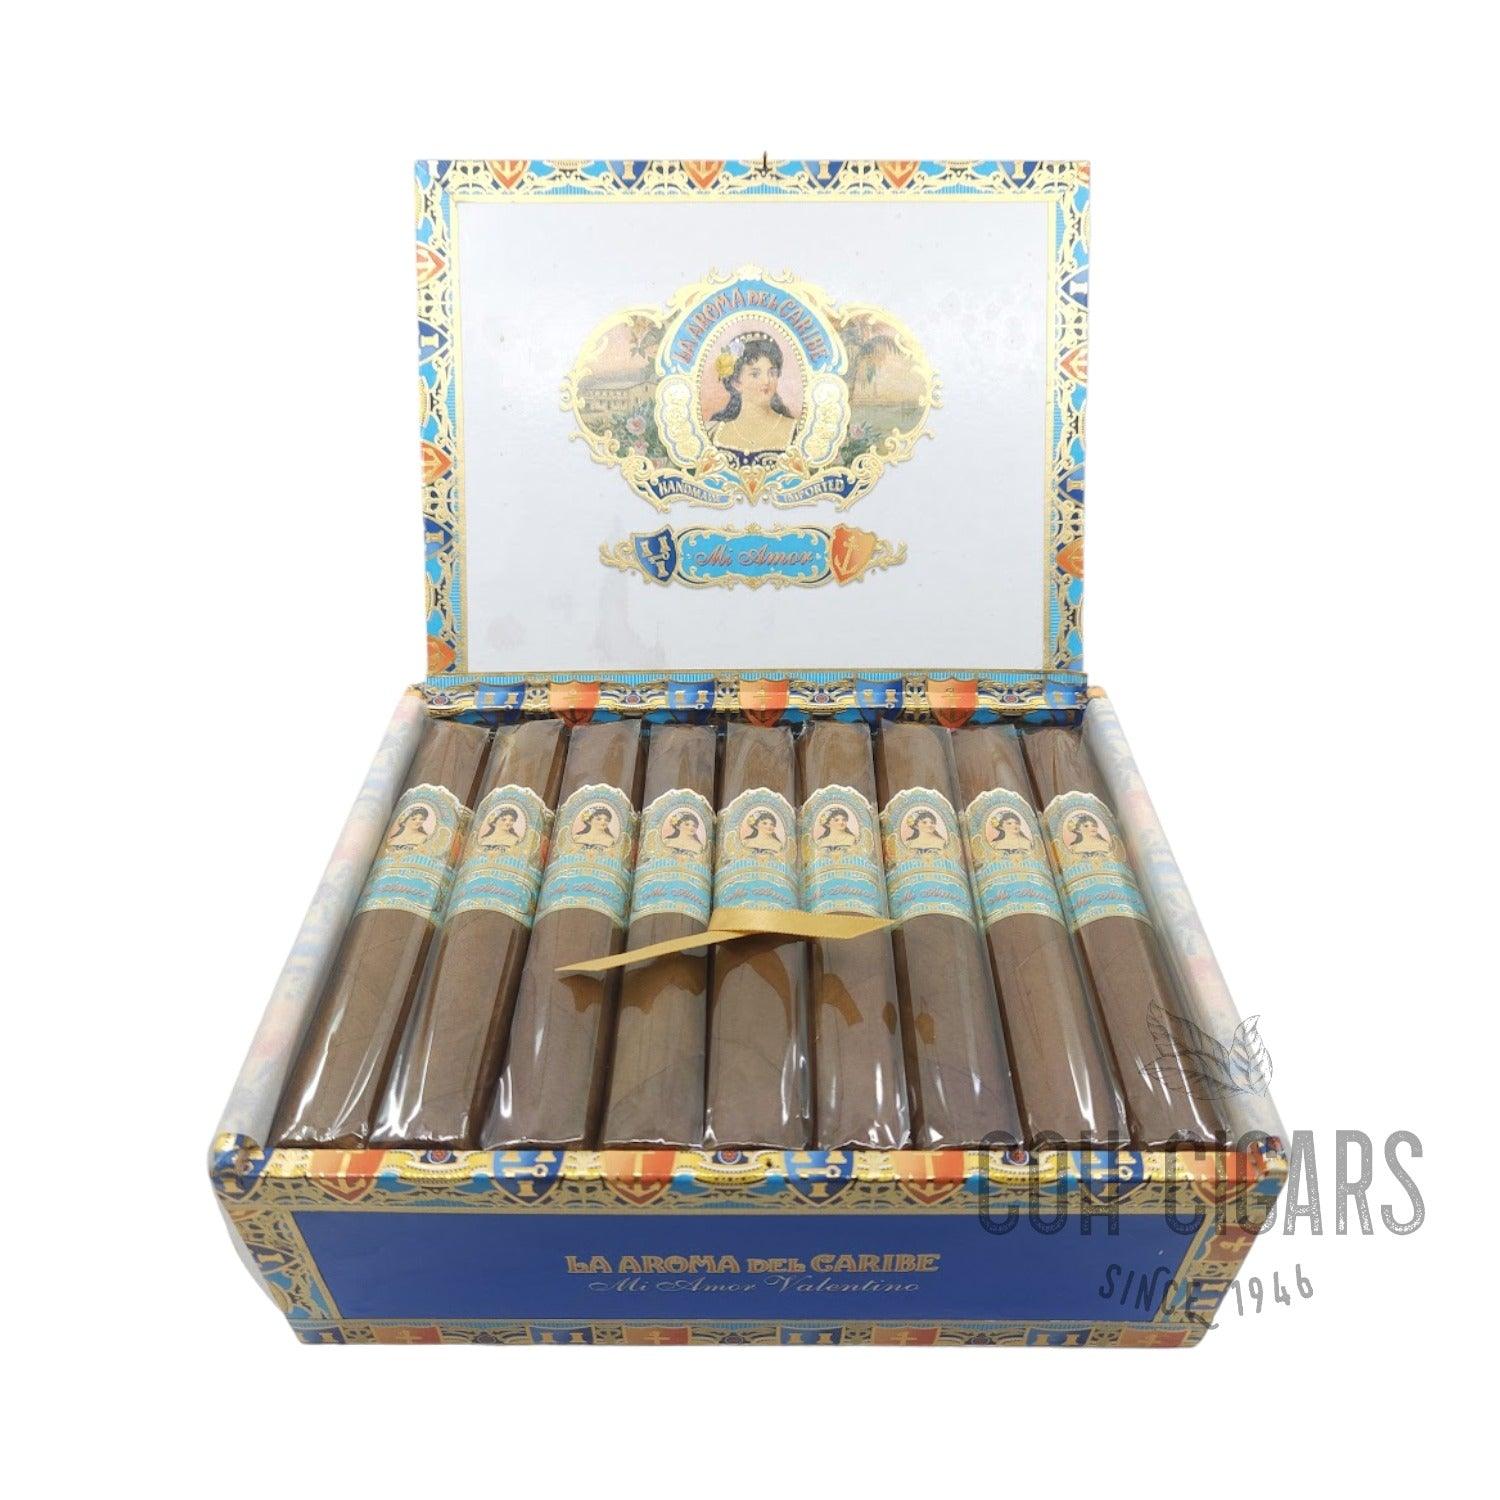 La Aroma del Caribe Cigar | Mi Amor Valentino | Box 25 - HK CohCigars